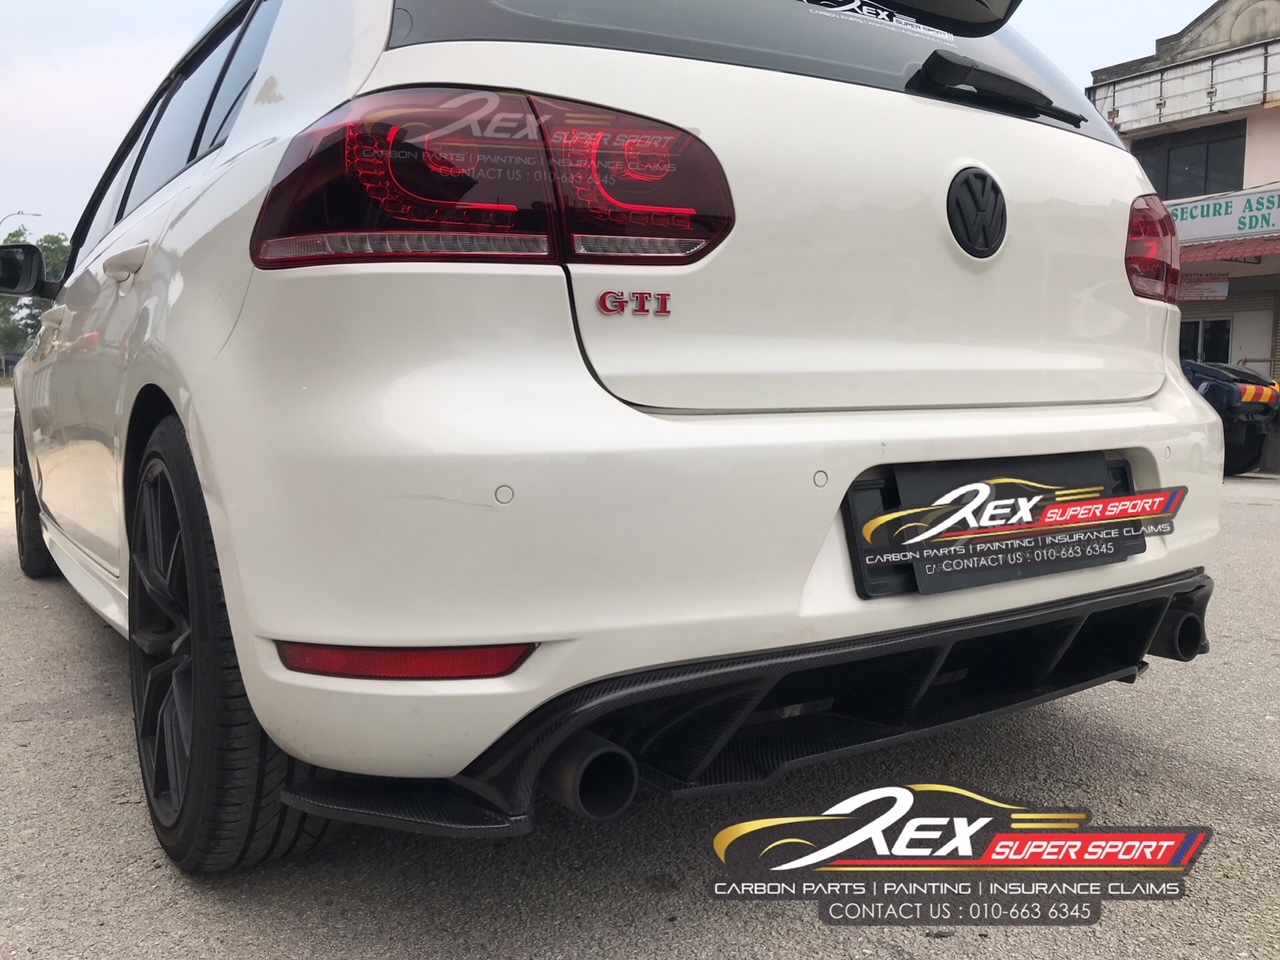 All Volkswagen Rear GTI Emblem | Rexsupersport - Specializes In ...